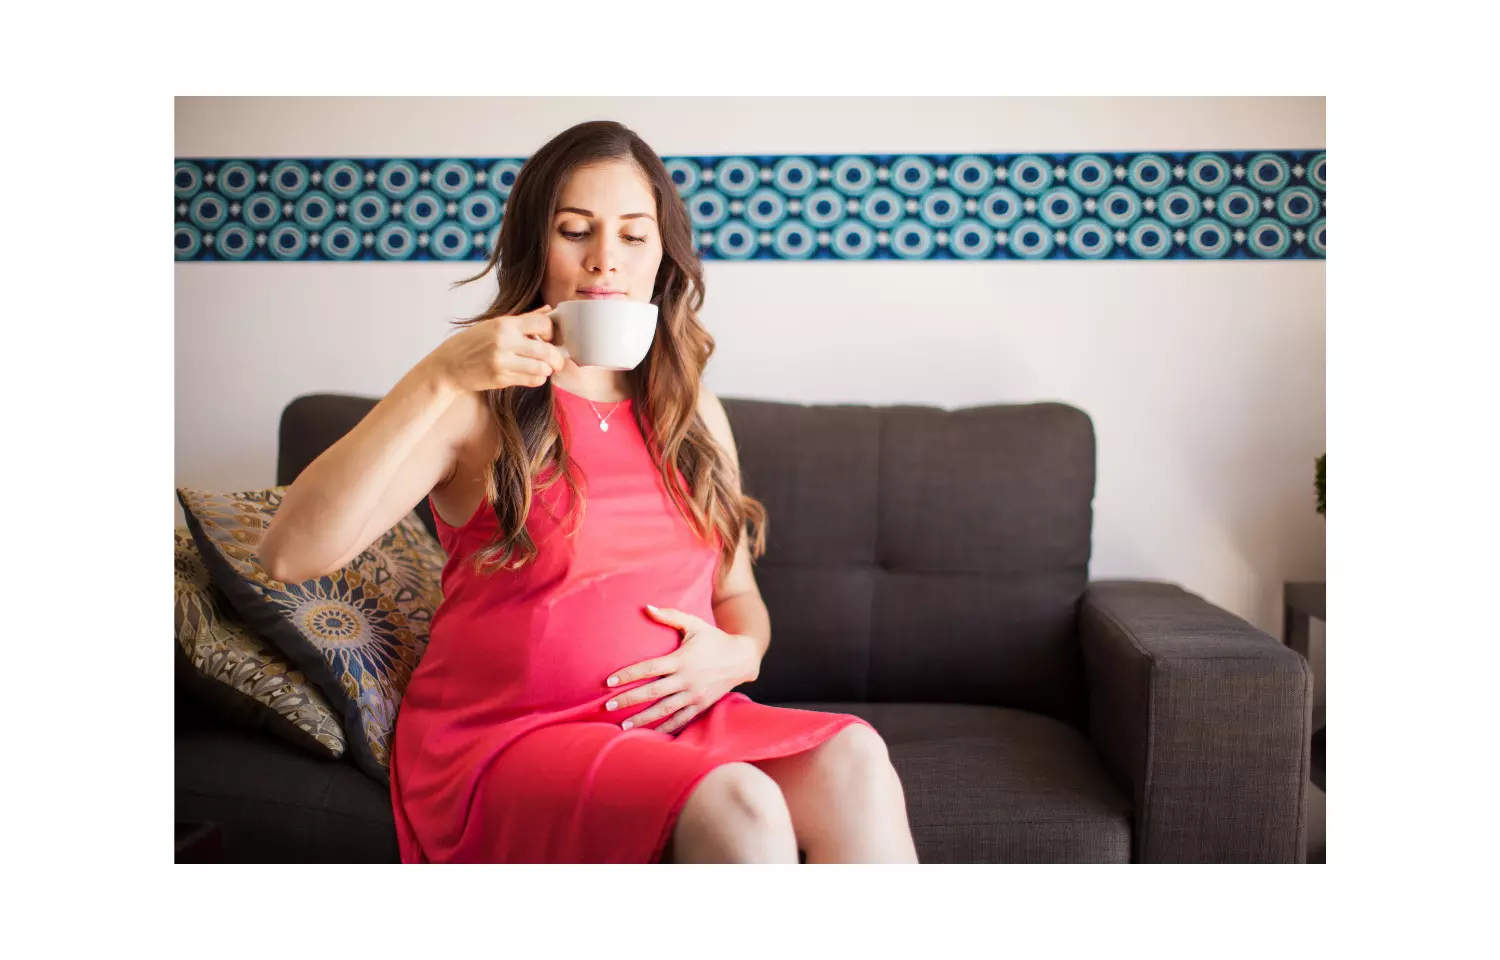 Moderate caffeine intake during pregnancy may lower gestational diabetes risk: JAMA